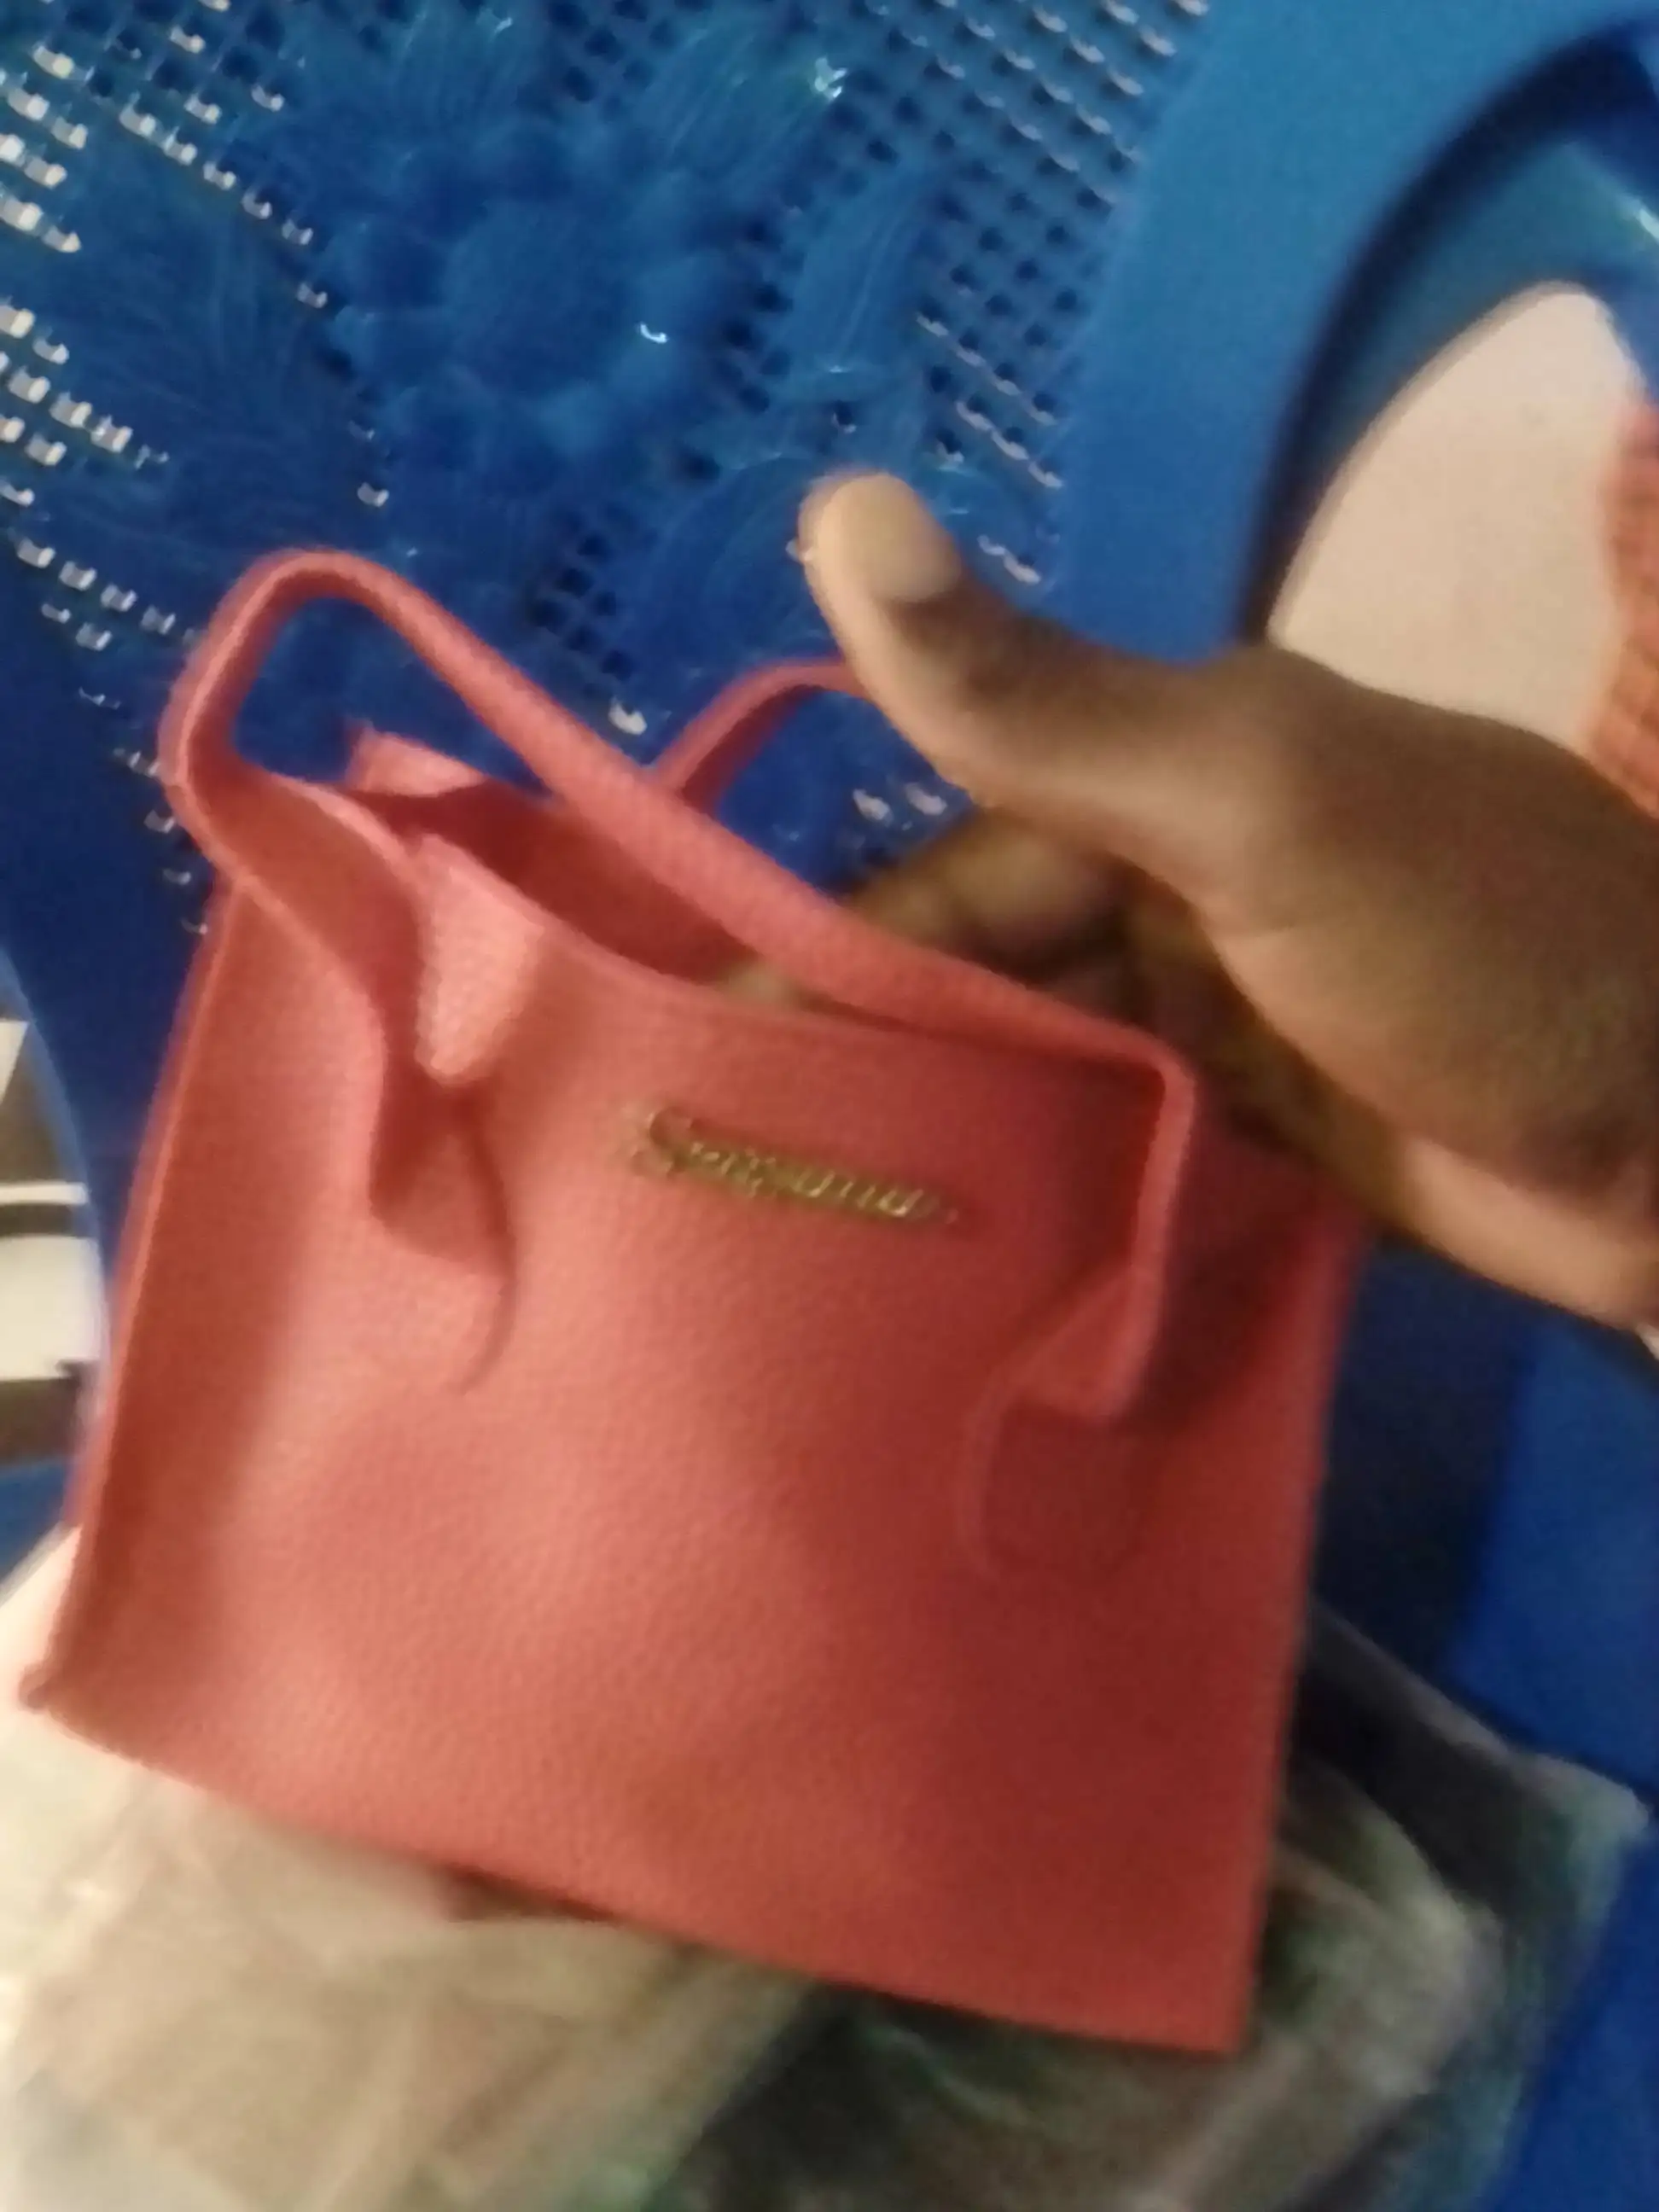 Source Simple fashion women small bag cheaper wholesale handbags ladies  shoulder bags causal tote bag on m.